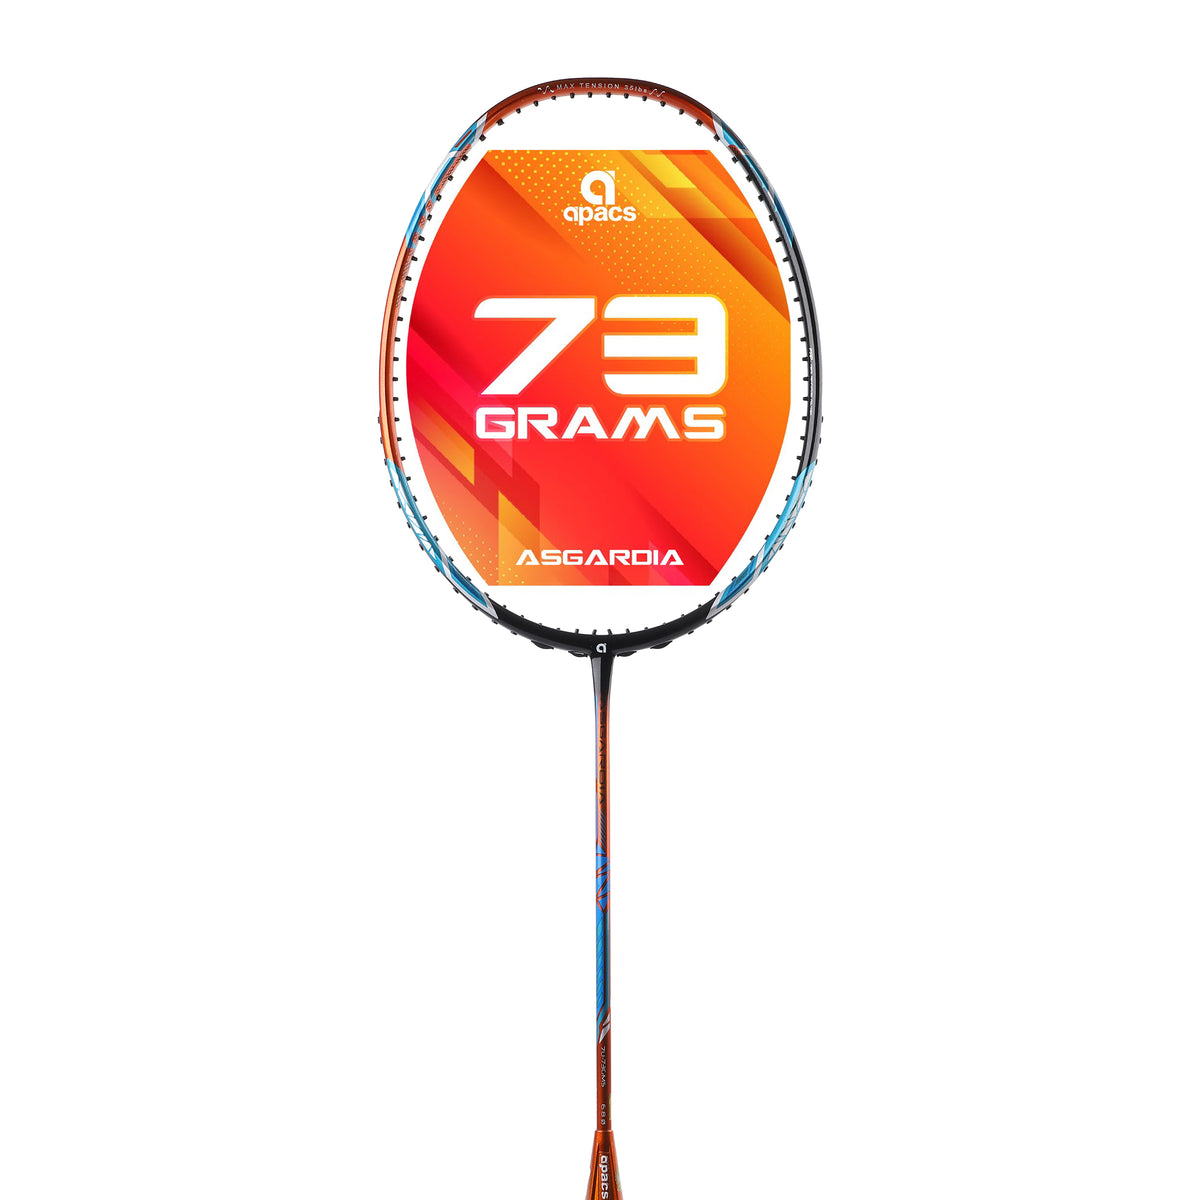 Apacs Asgardia Control - Professional Badminton Racket with Full Cover ...